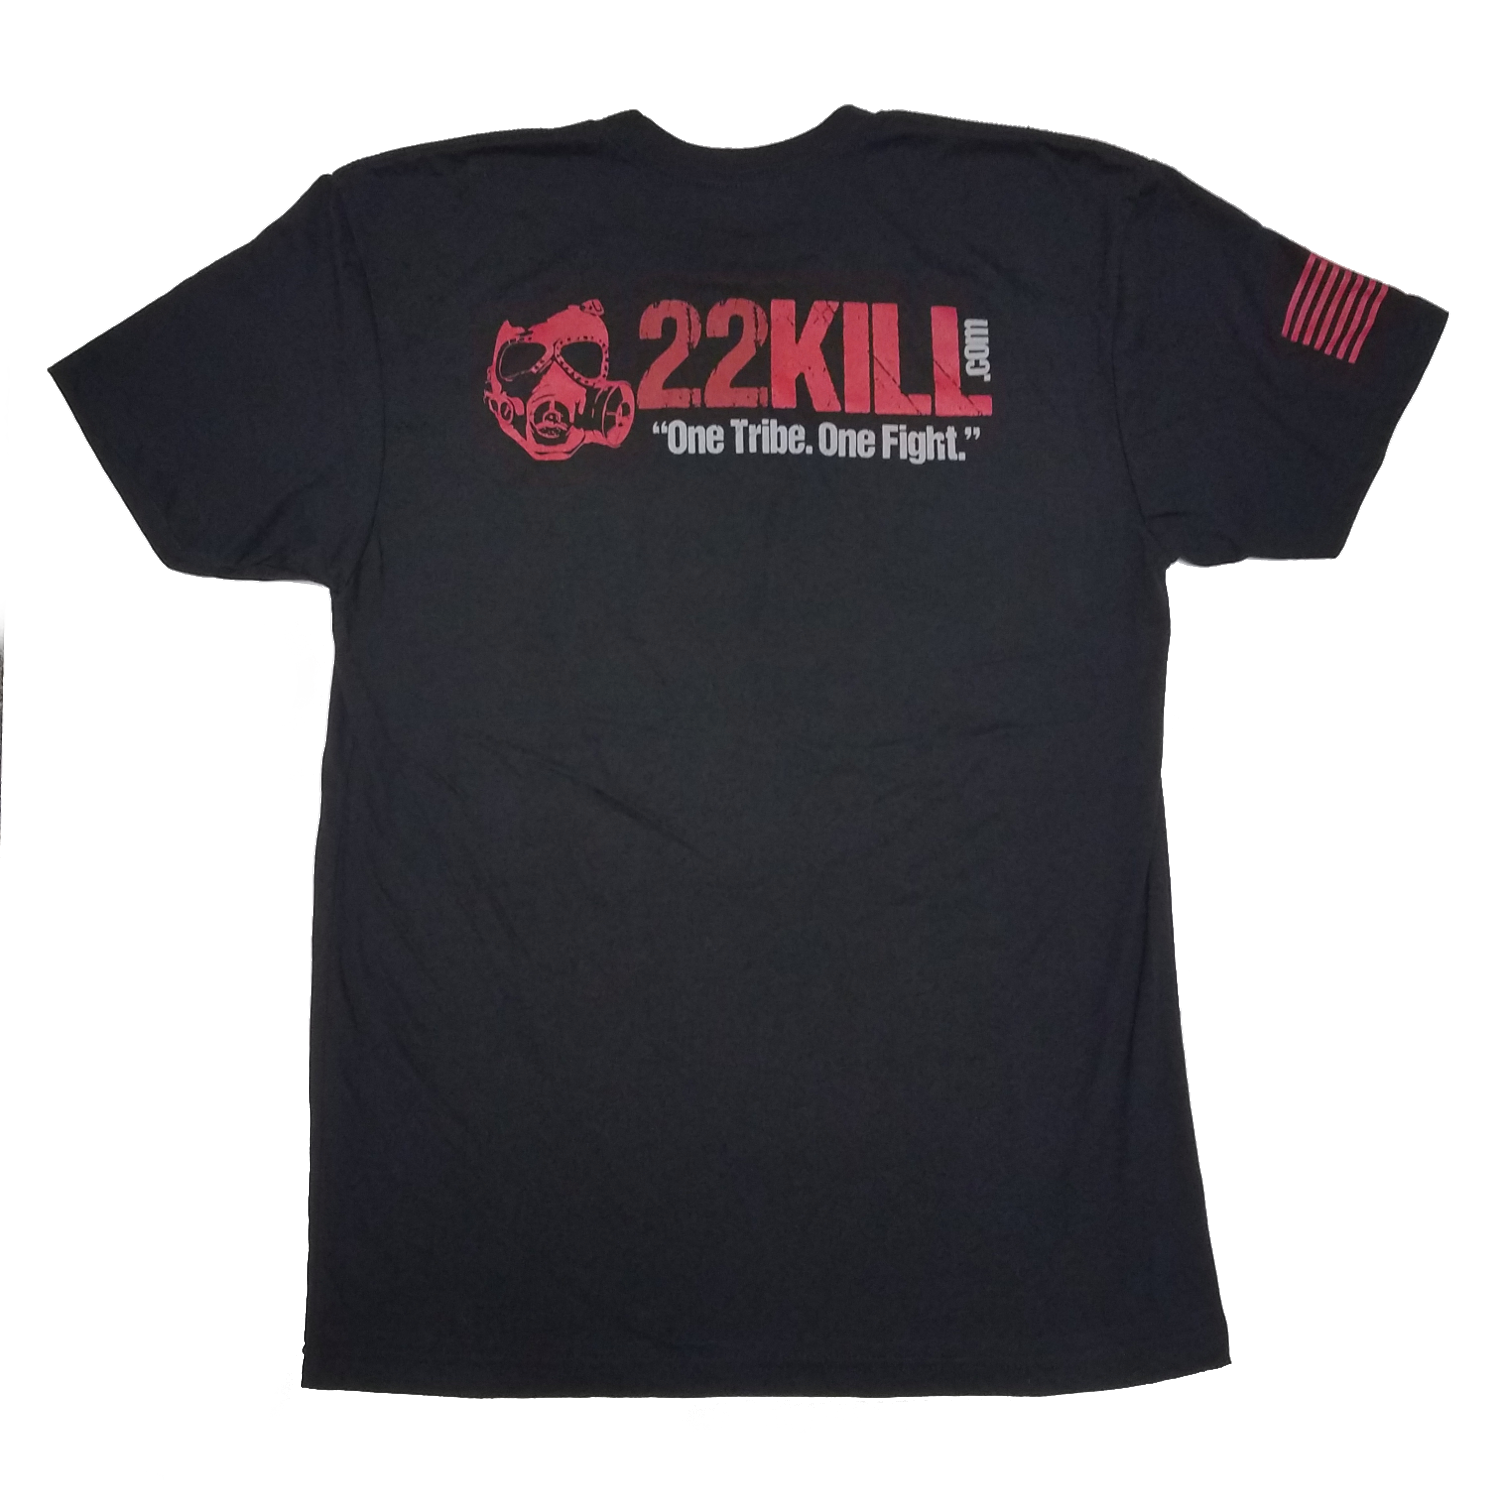 "OG" 22KILL t-shirt in black. One Tribe. One Fight.